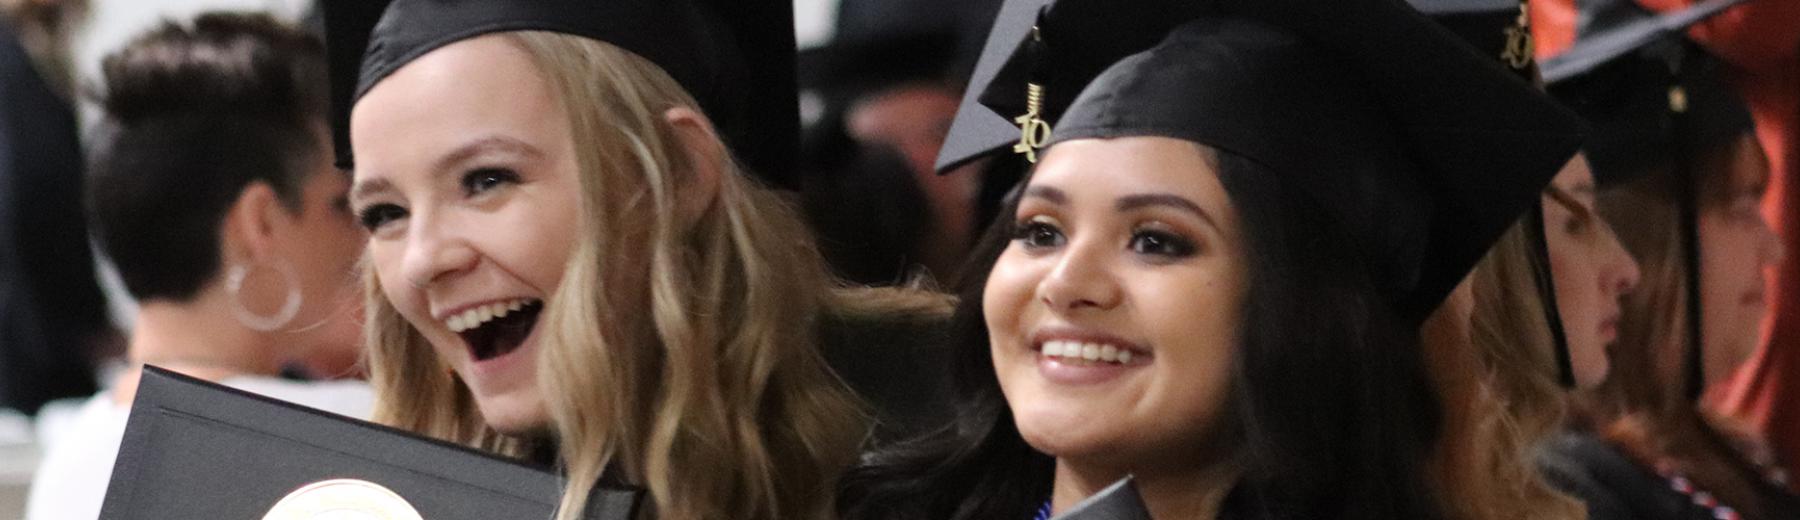 Redlands students smiling at graduation